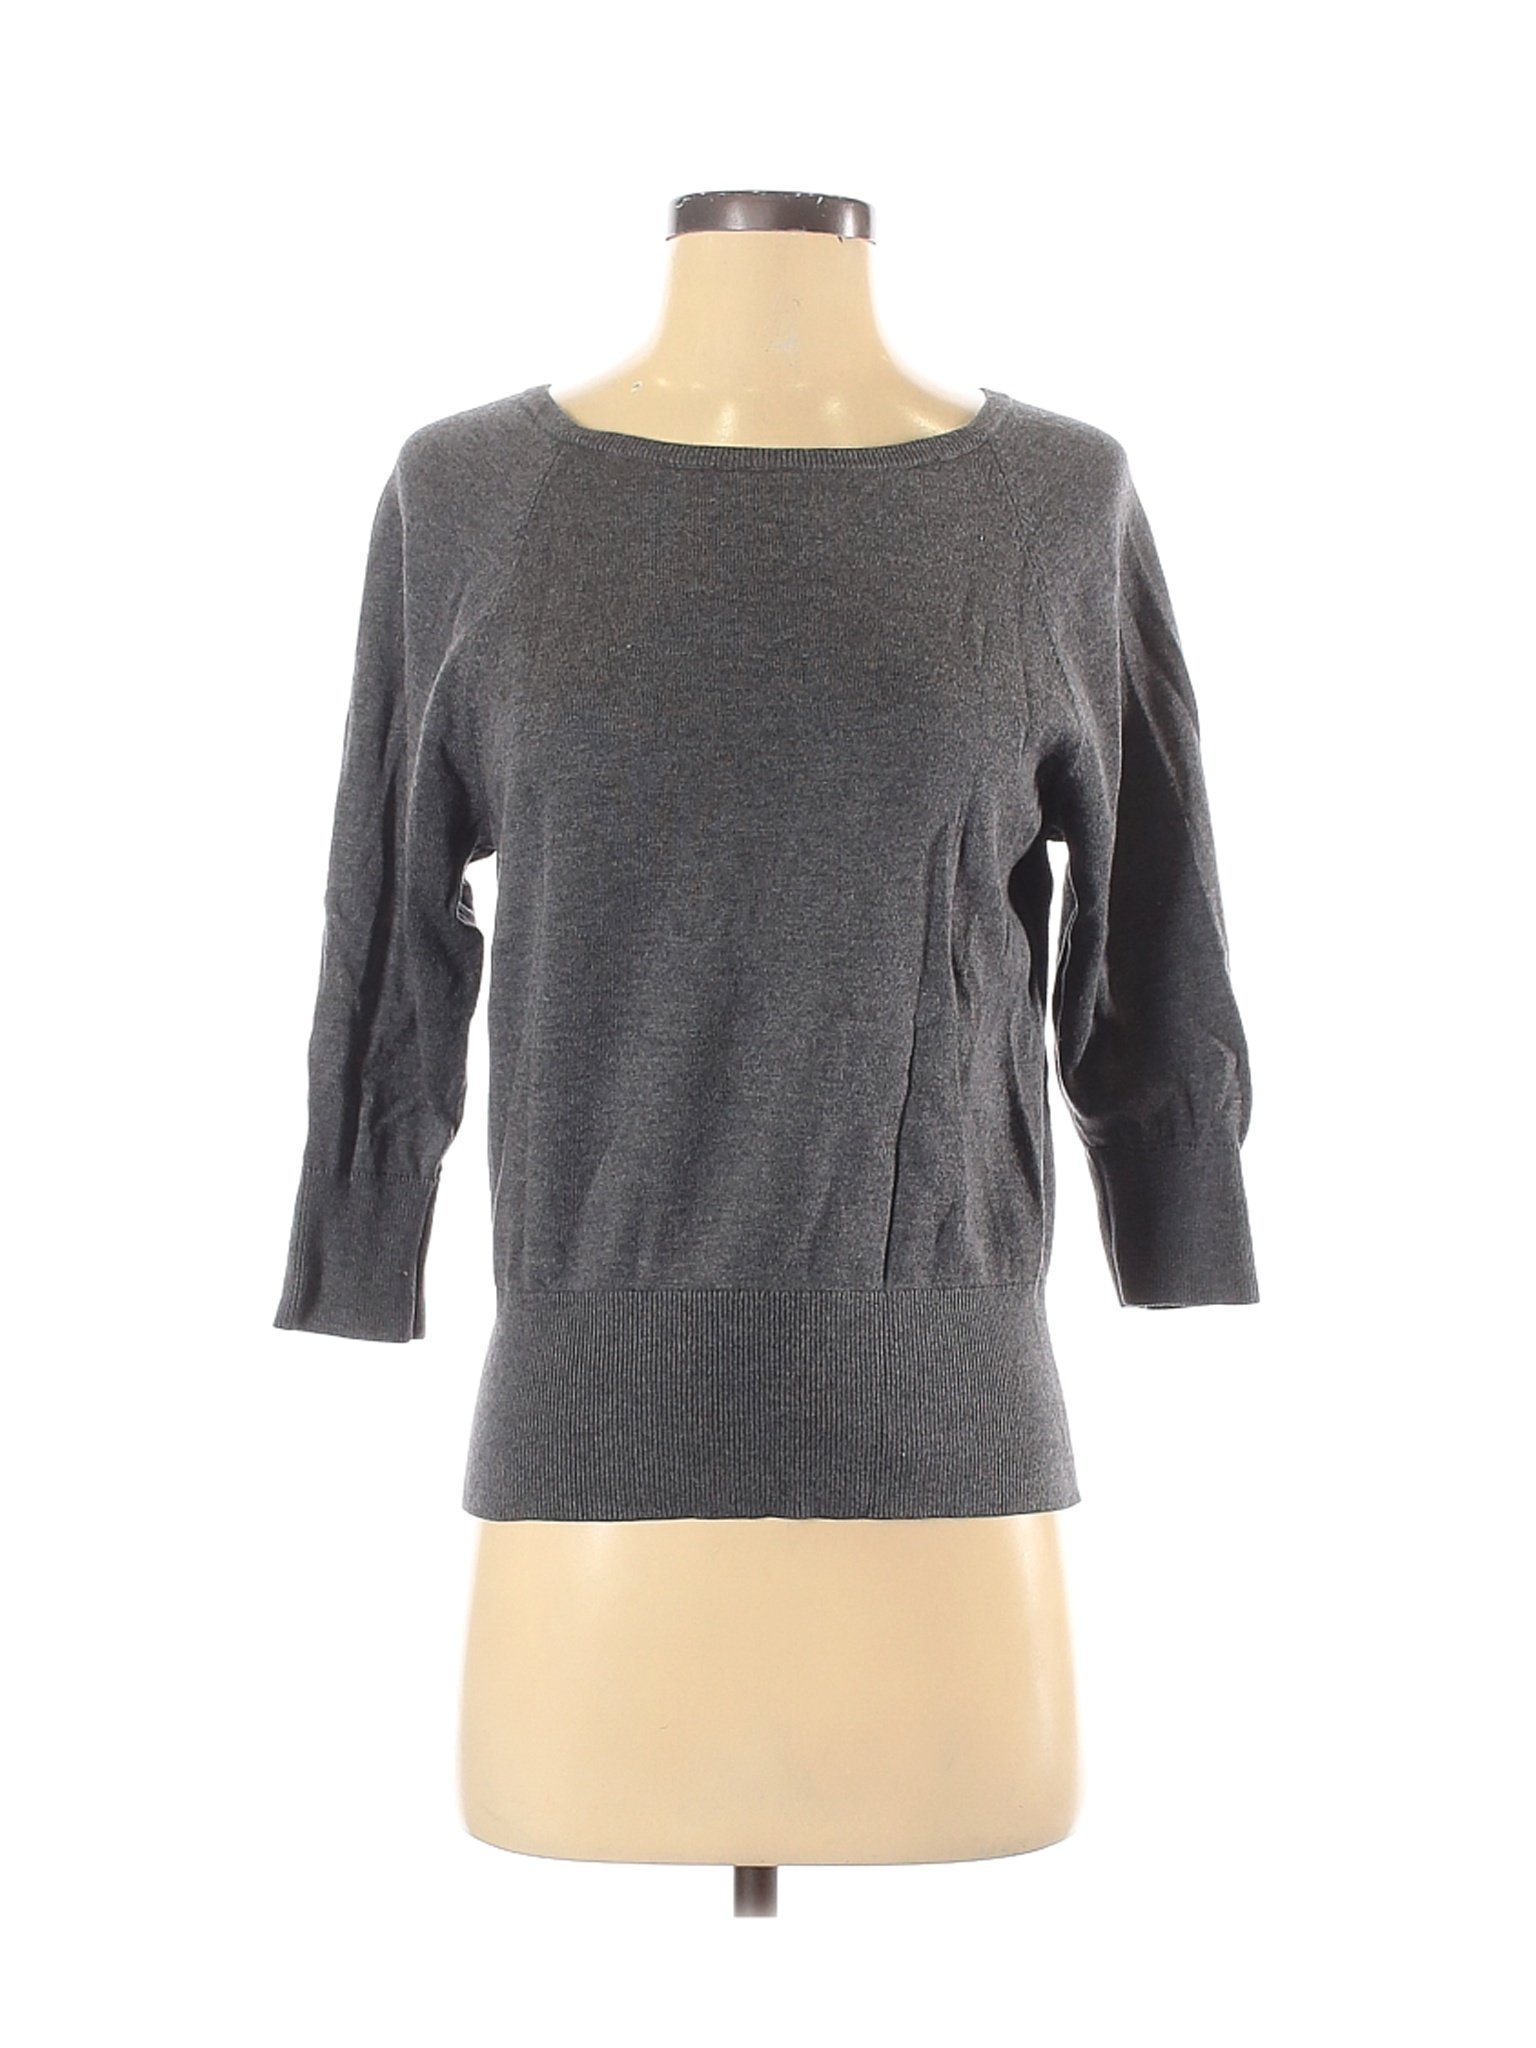 Talbots Women Gray Pullover Sweater S Petites | eBay